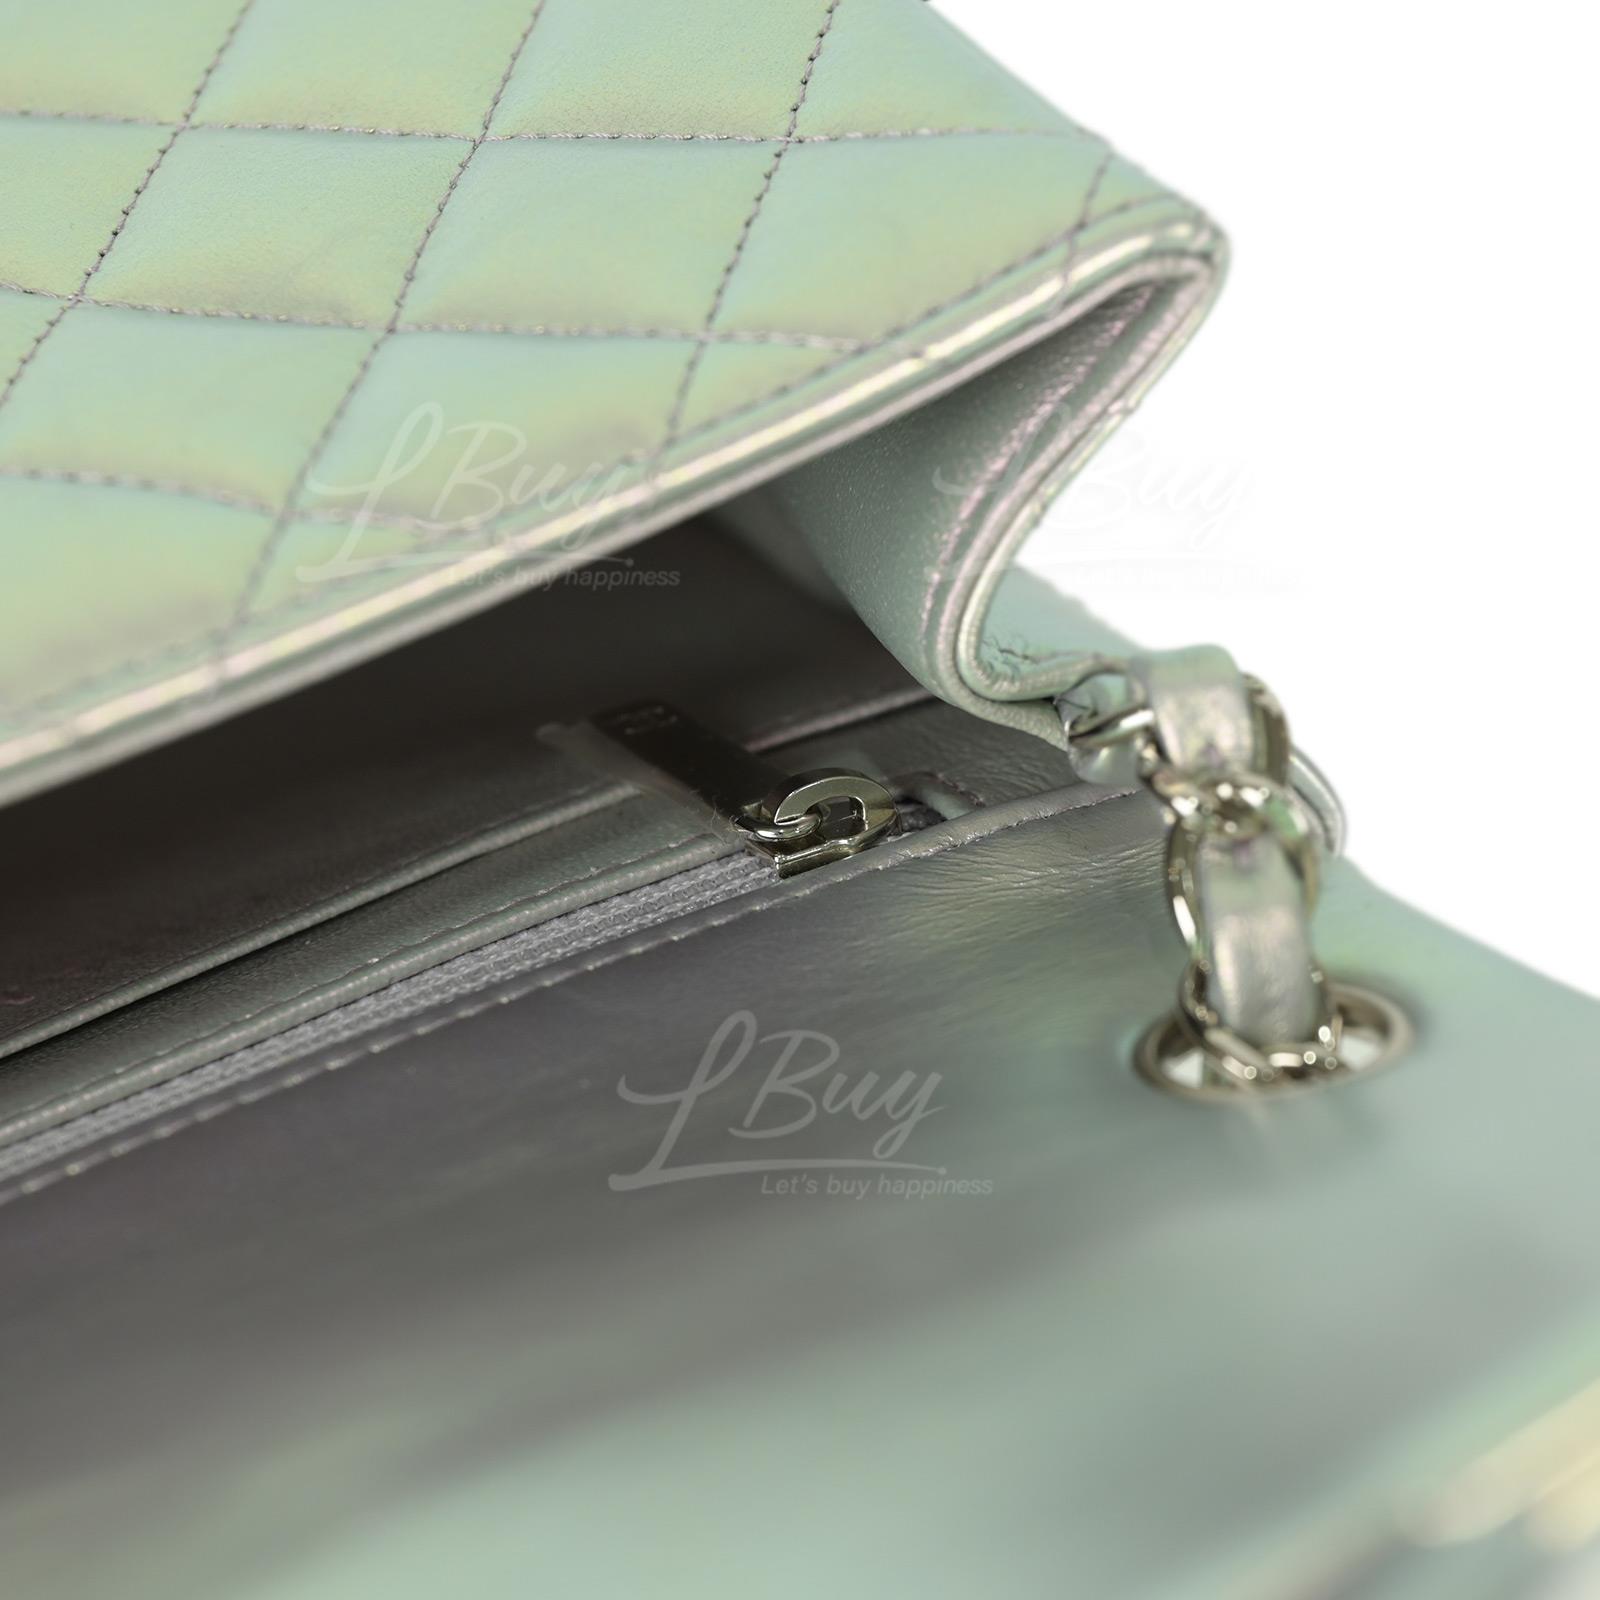 Túi Chanel Classic Handbag Lambskin Sky Blue A01112-Y04059-NA104